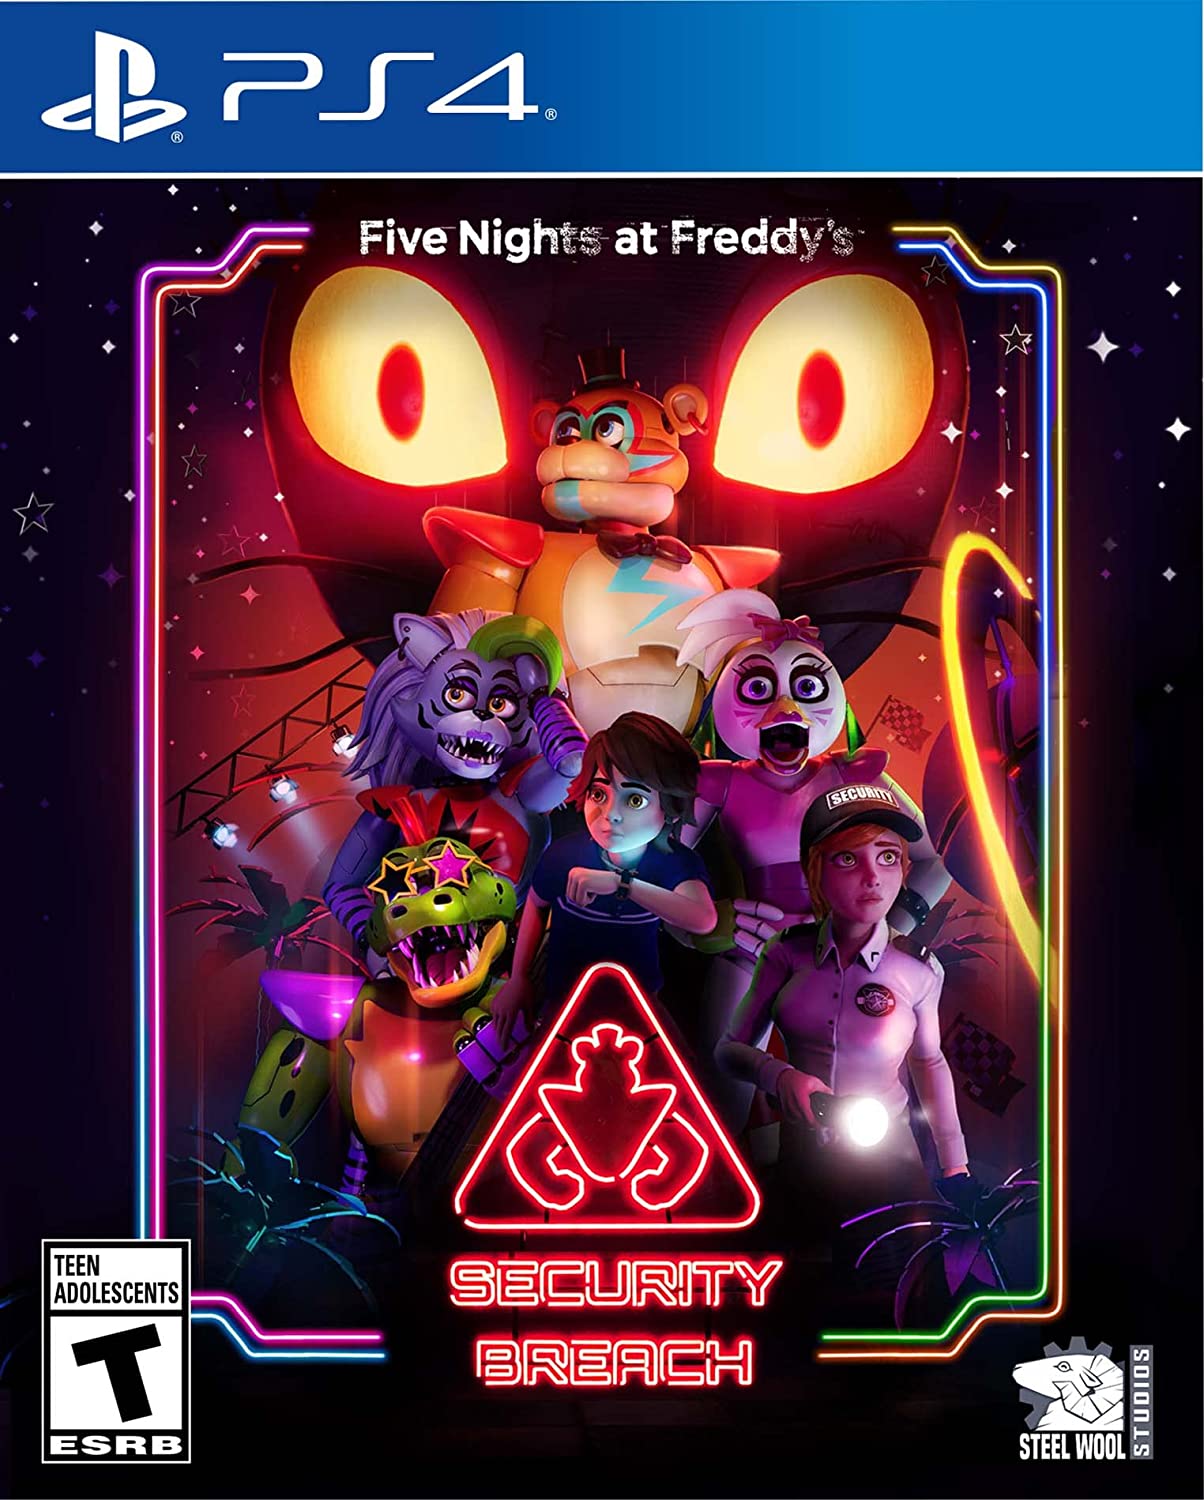 Five Nights At Freddy's 5 - Fnaf Games